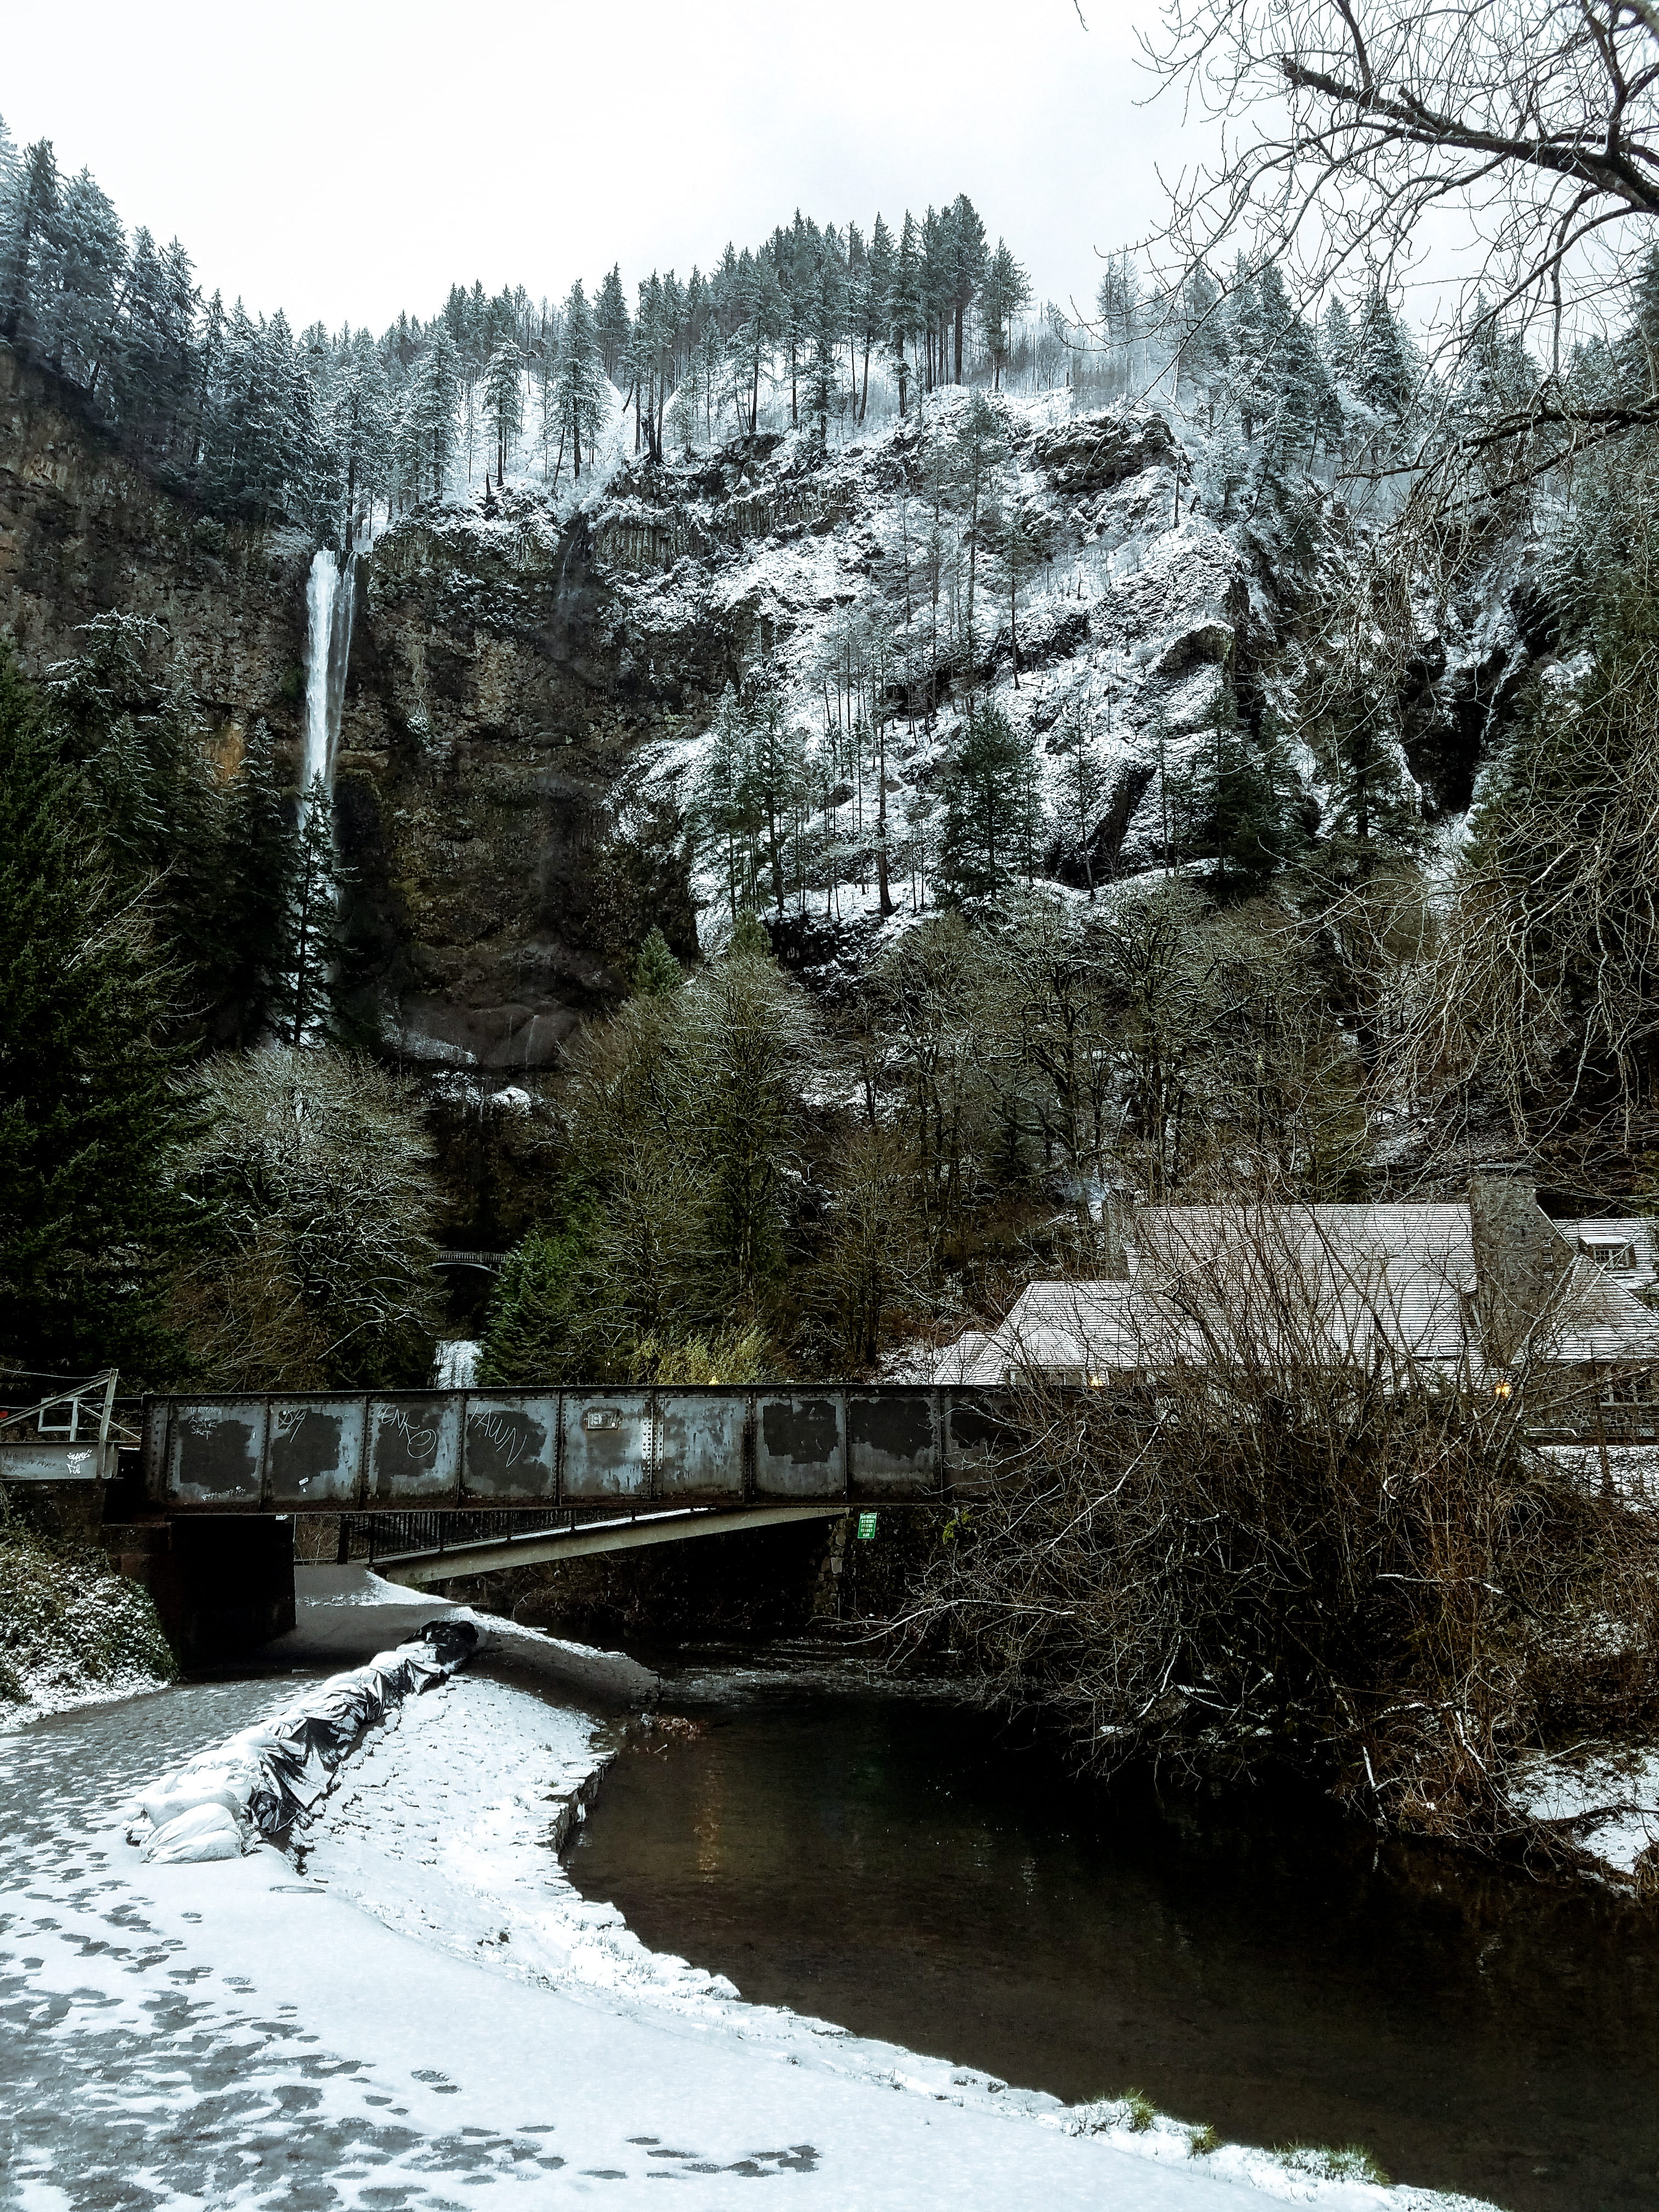 united states, multnomah falls, waterfall, railroad, winter